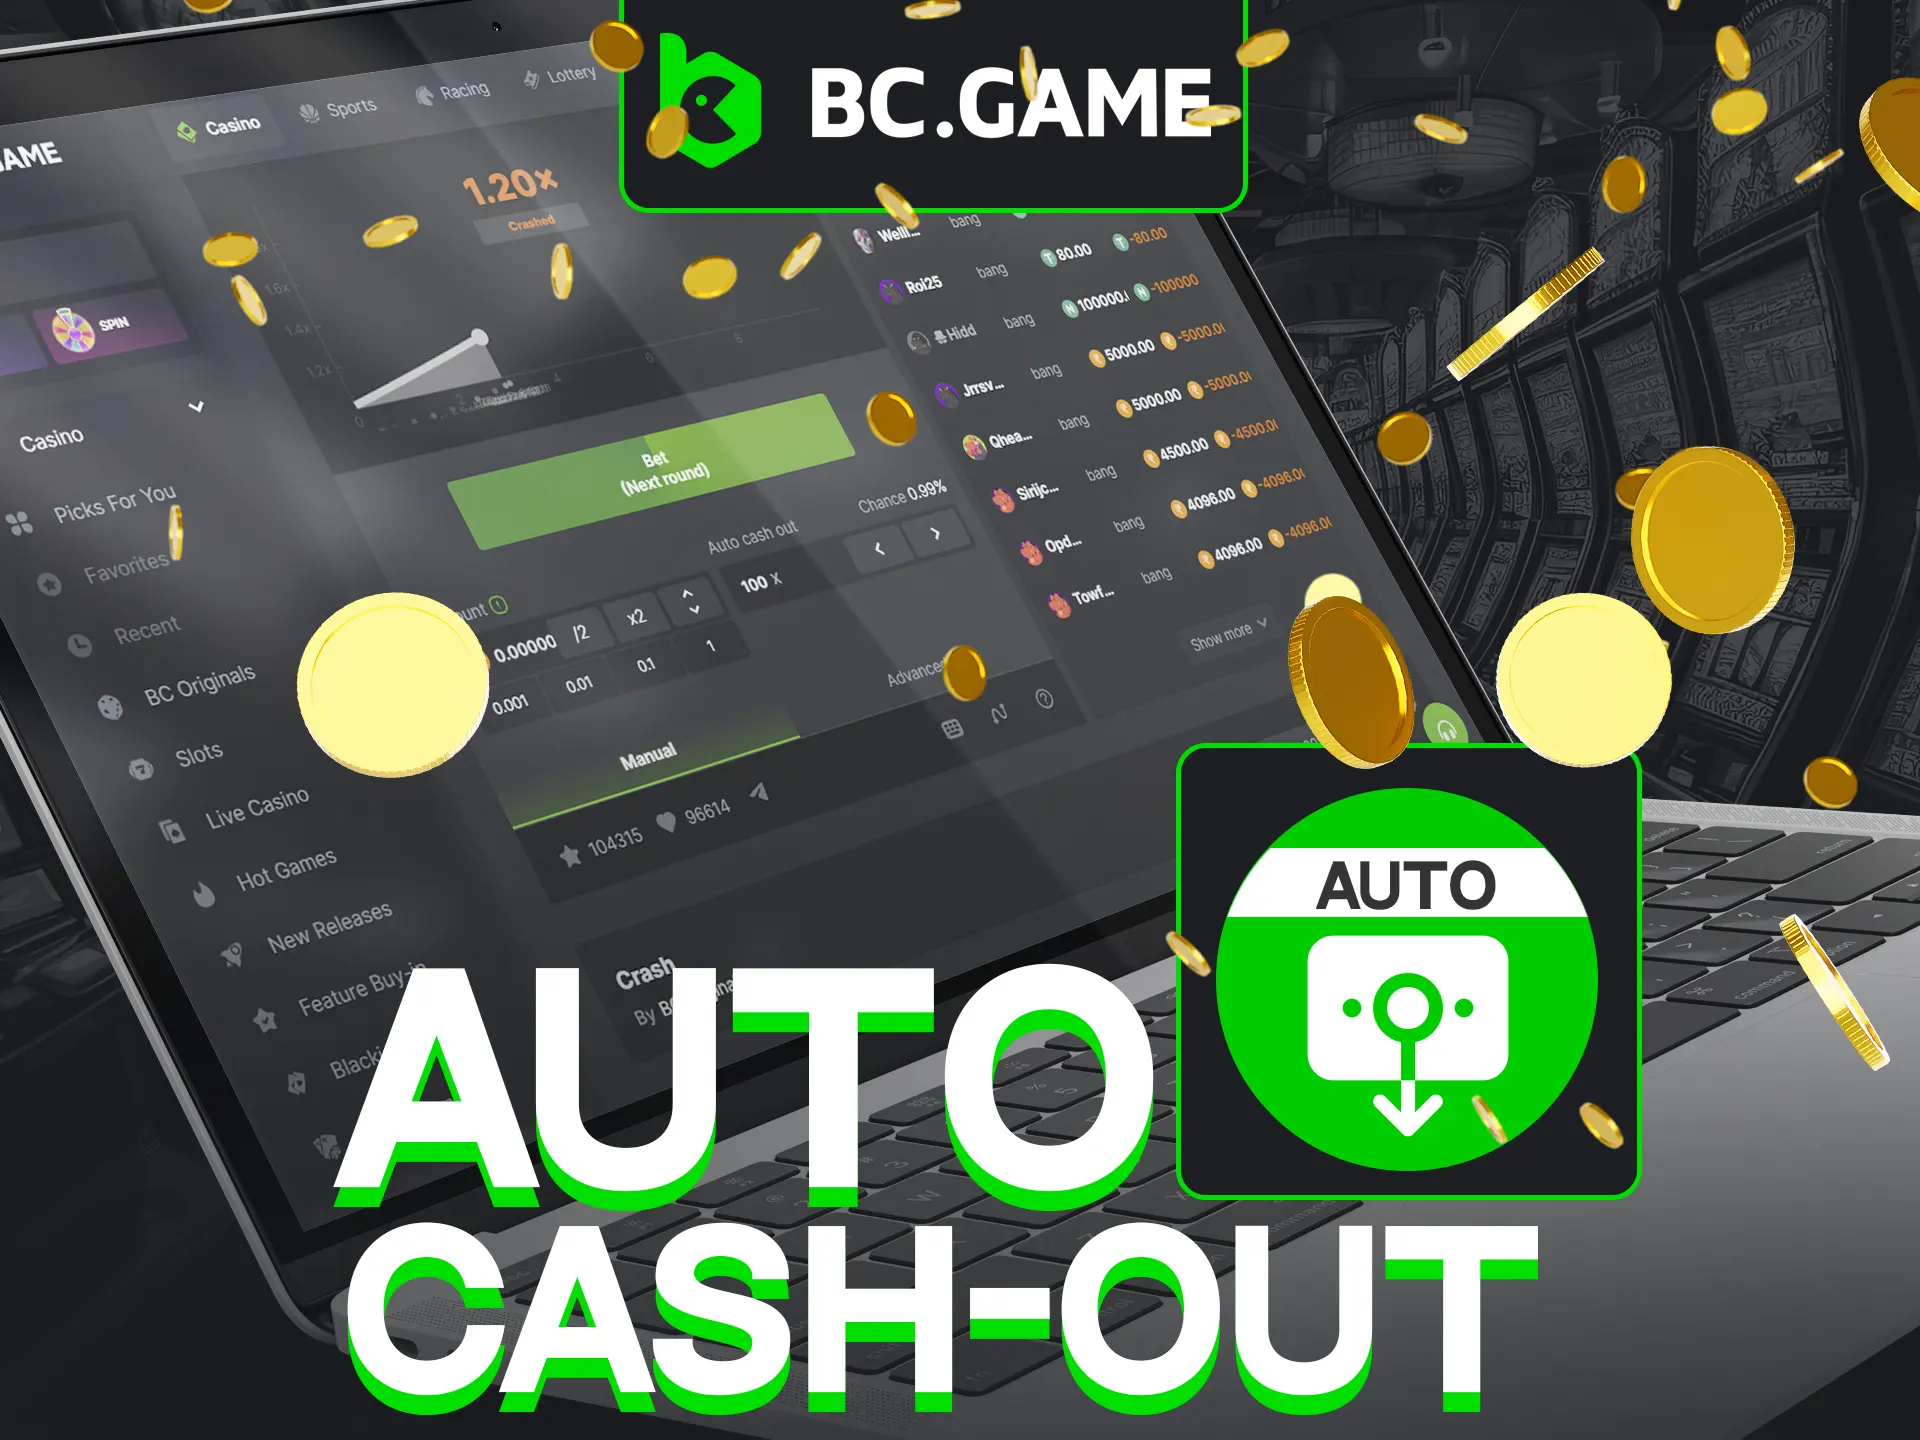 BC Game's auto cashout avoids manual cashing risks.